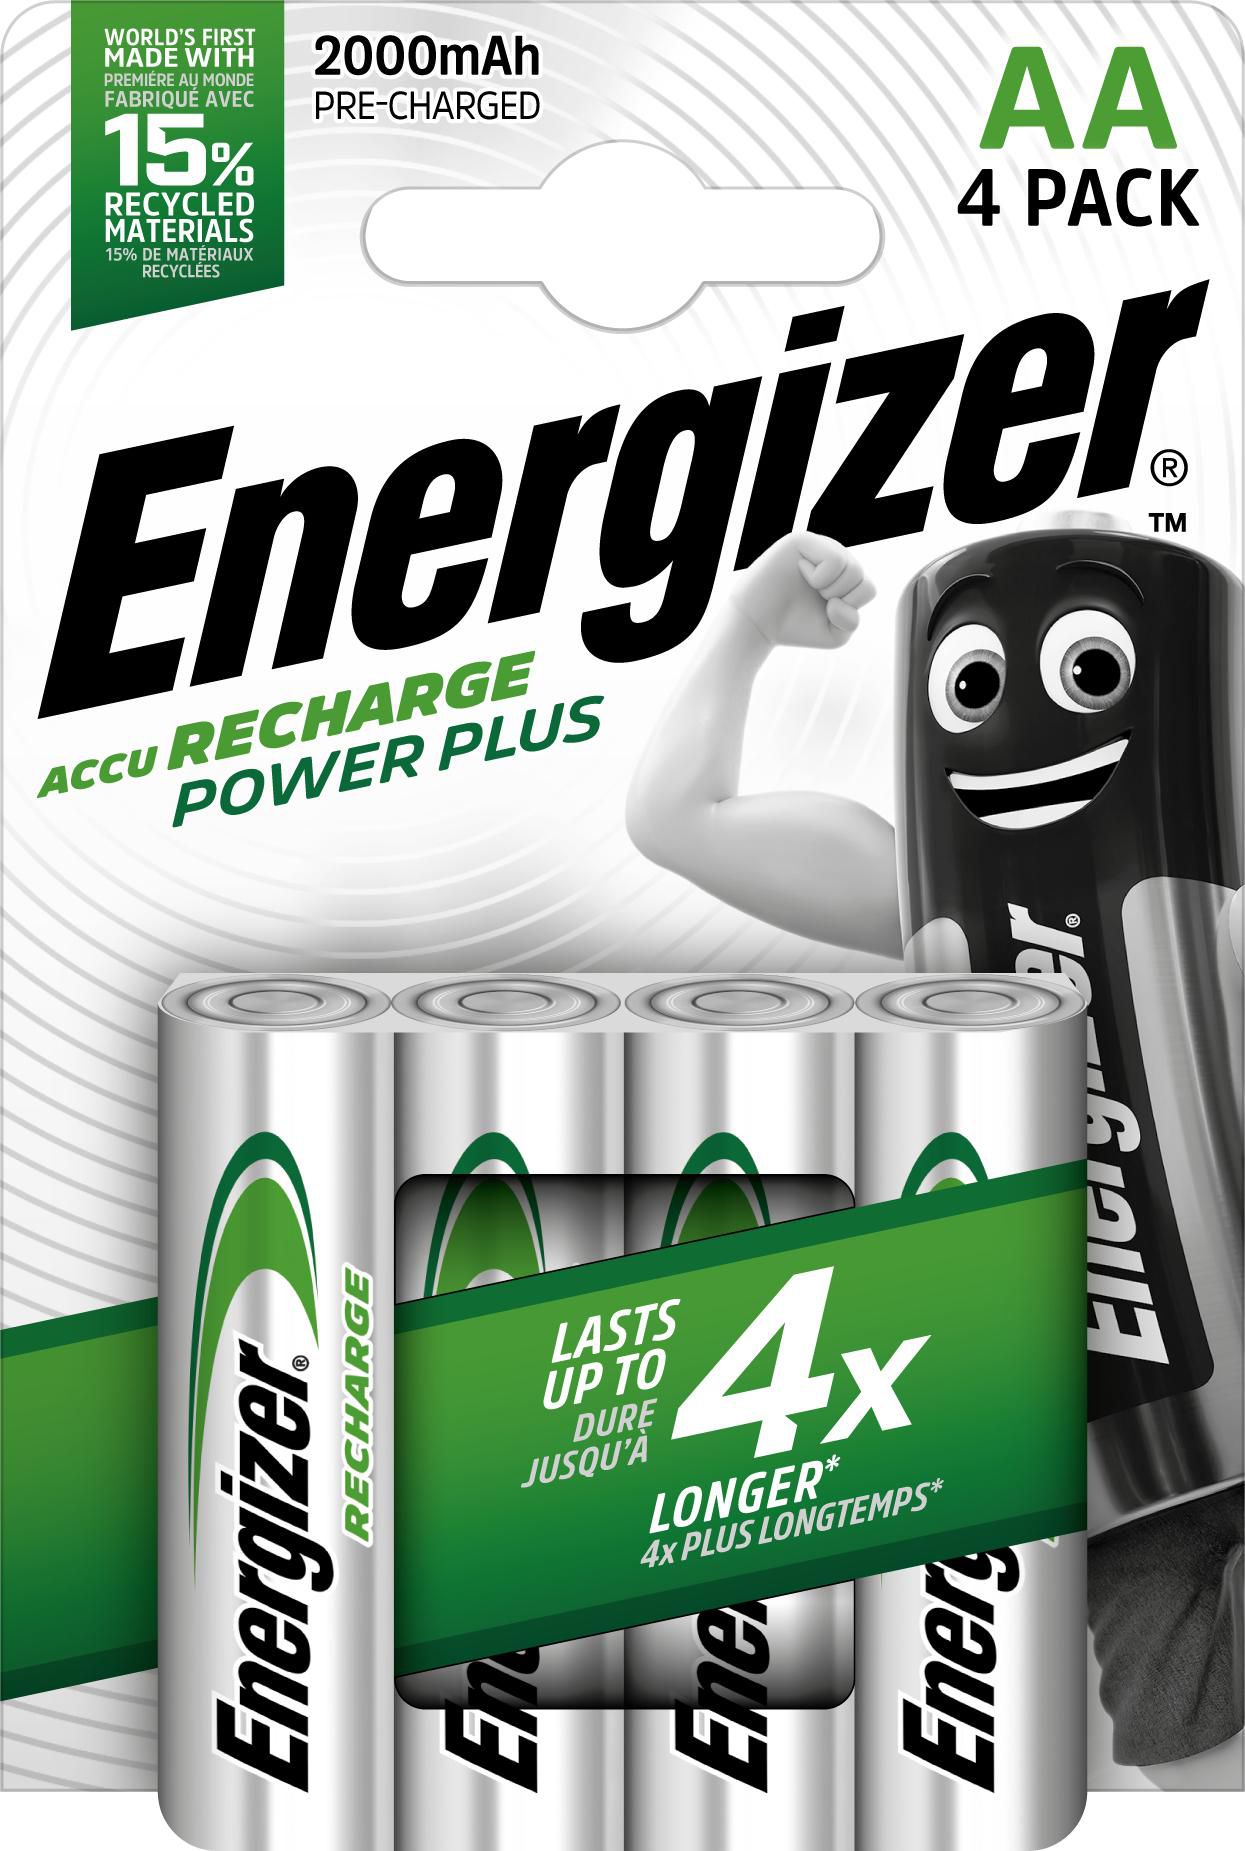 Energizer E300626700 W128253126 Accu Recharge Power Plus 2000 